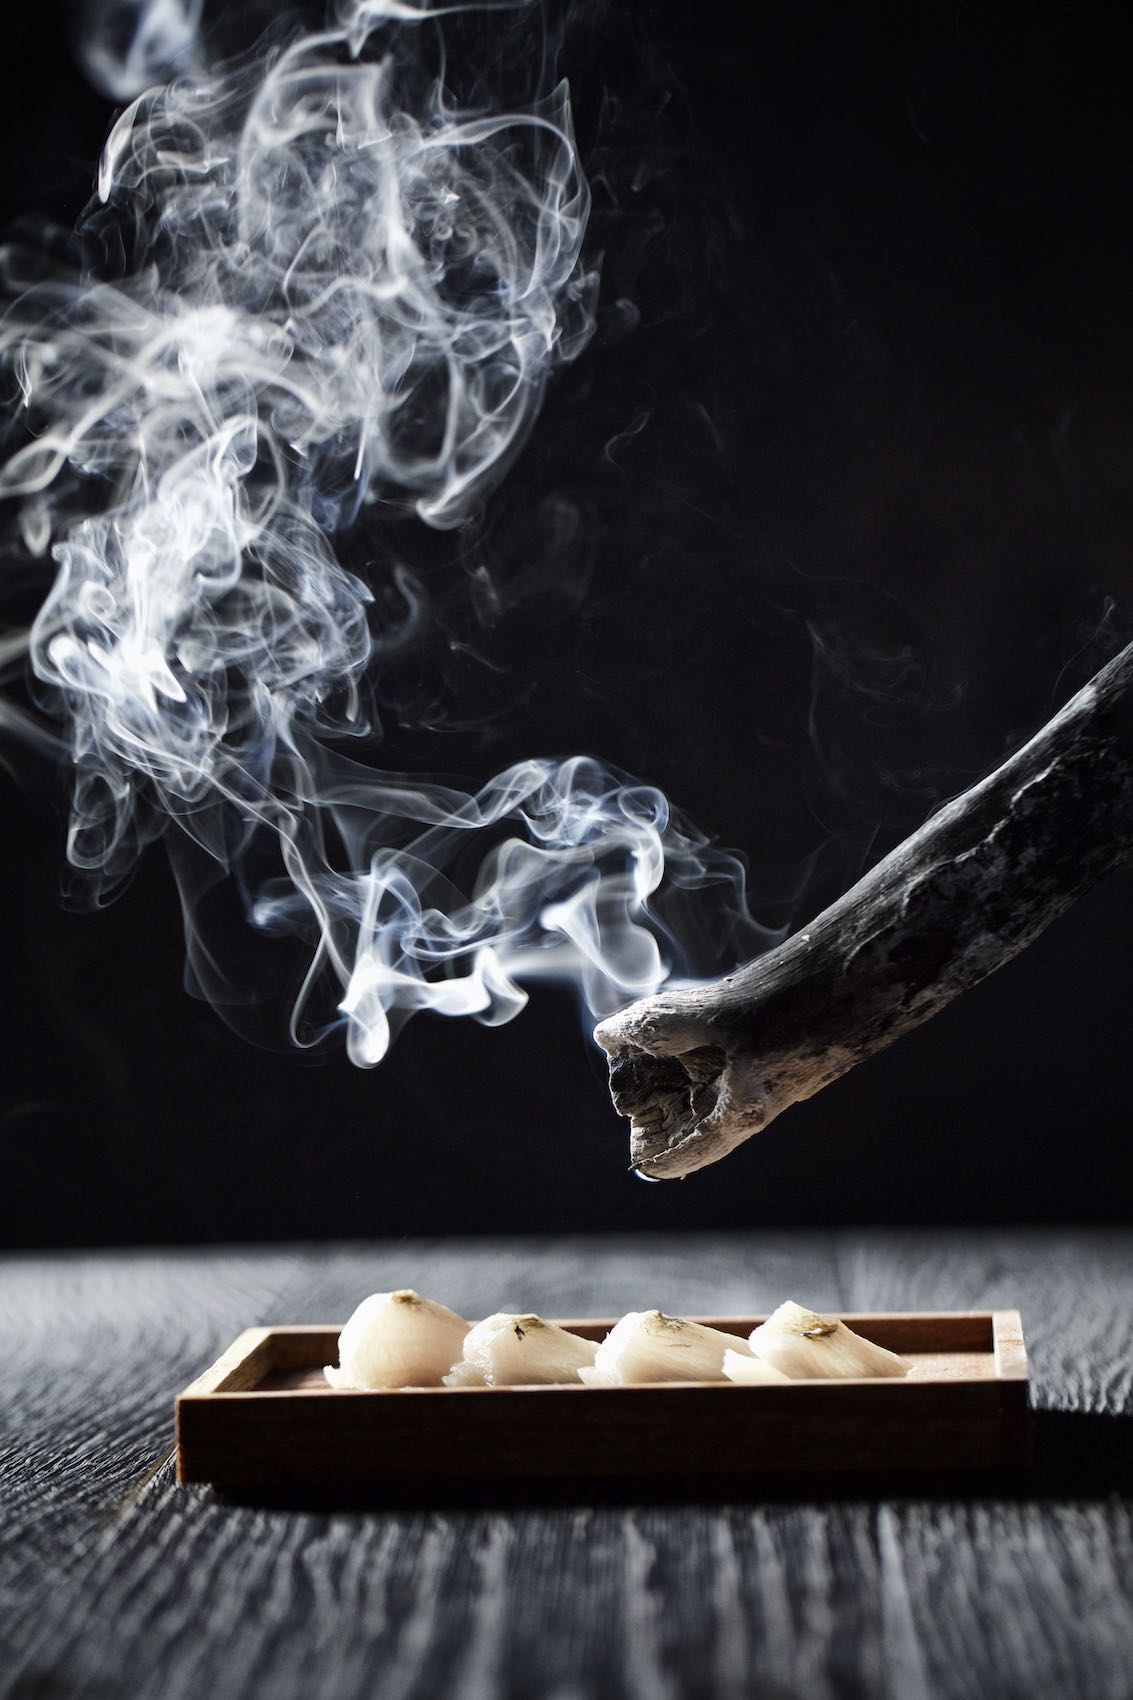 Jody Horton Photography - Charred wood being used to smoke sashimi on a black table. 